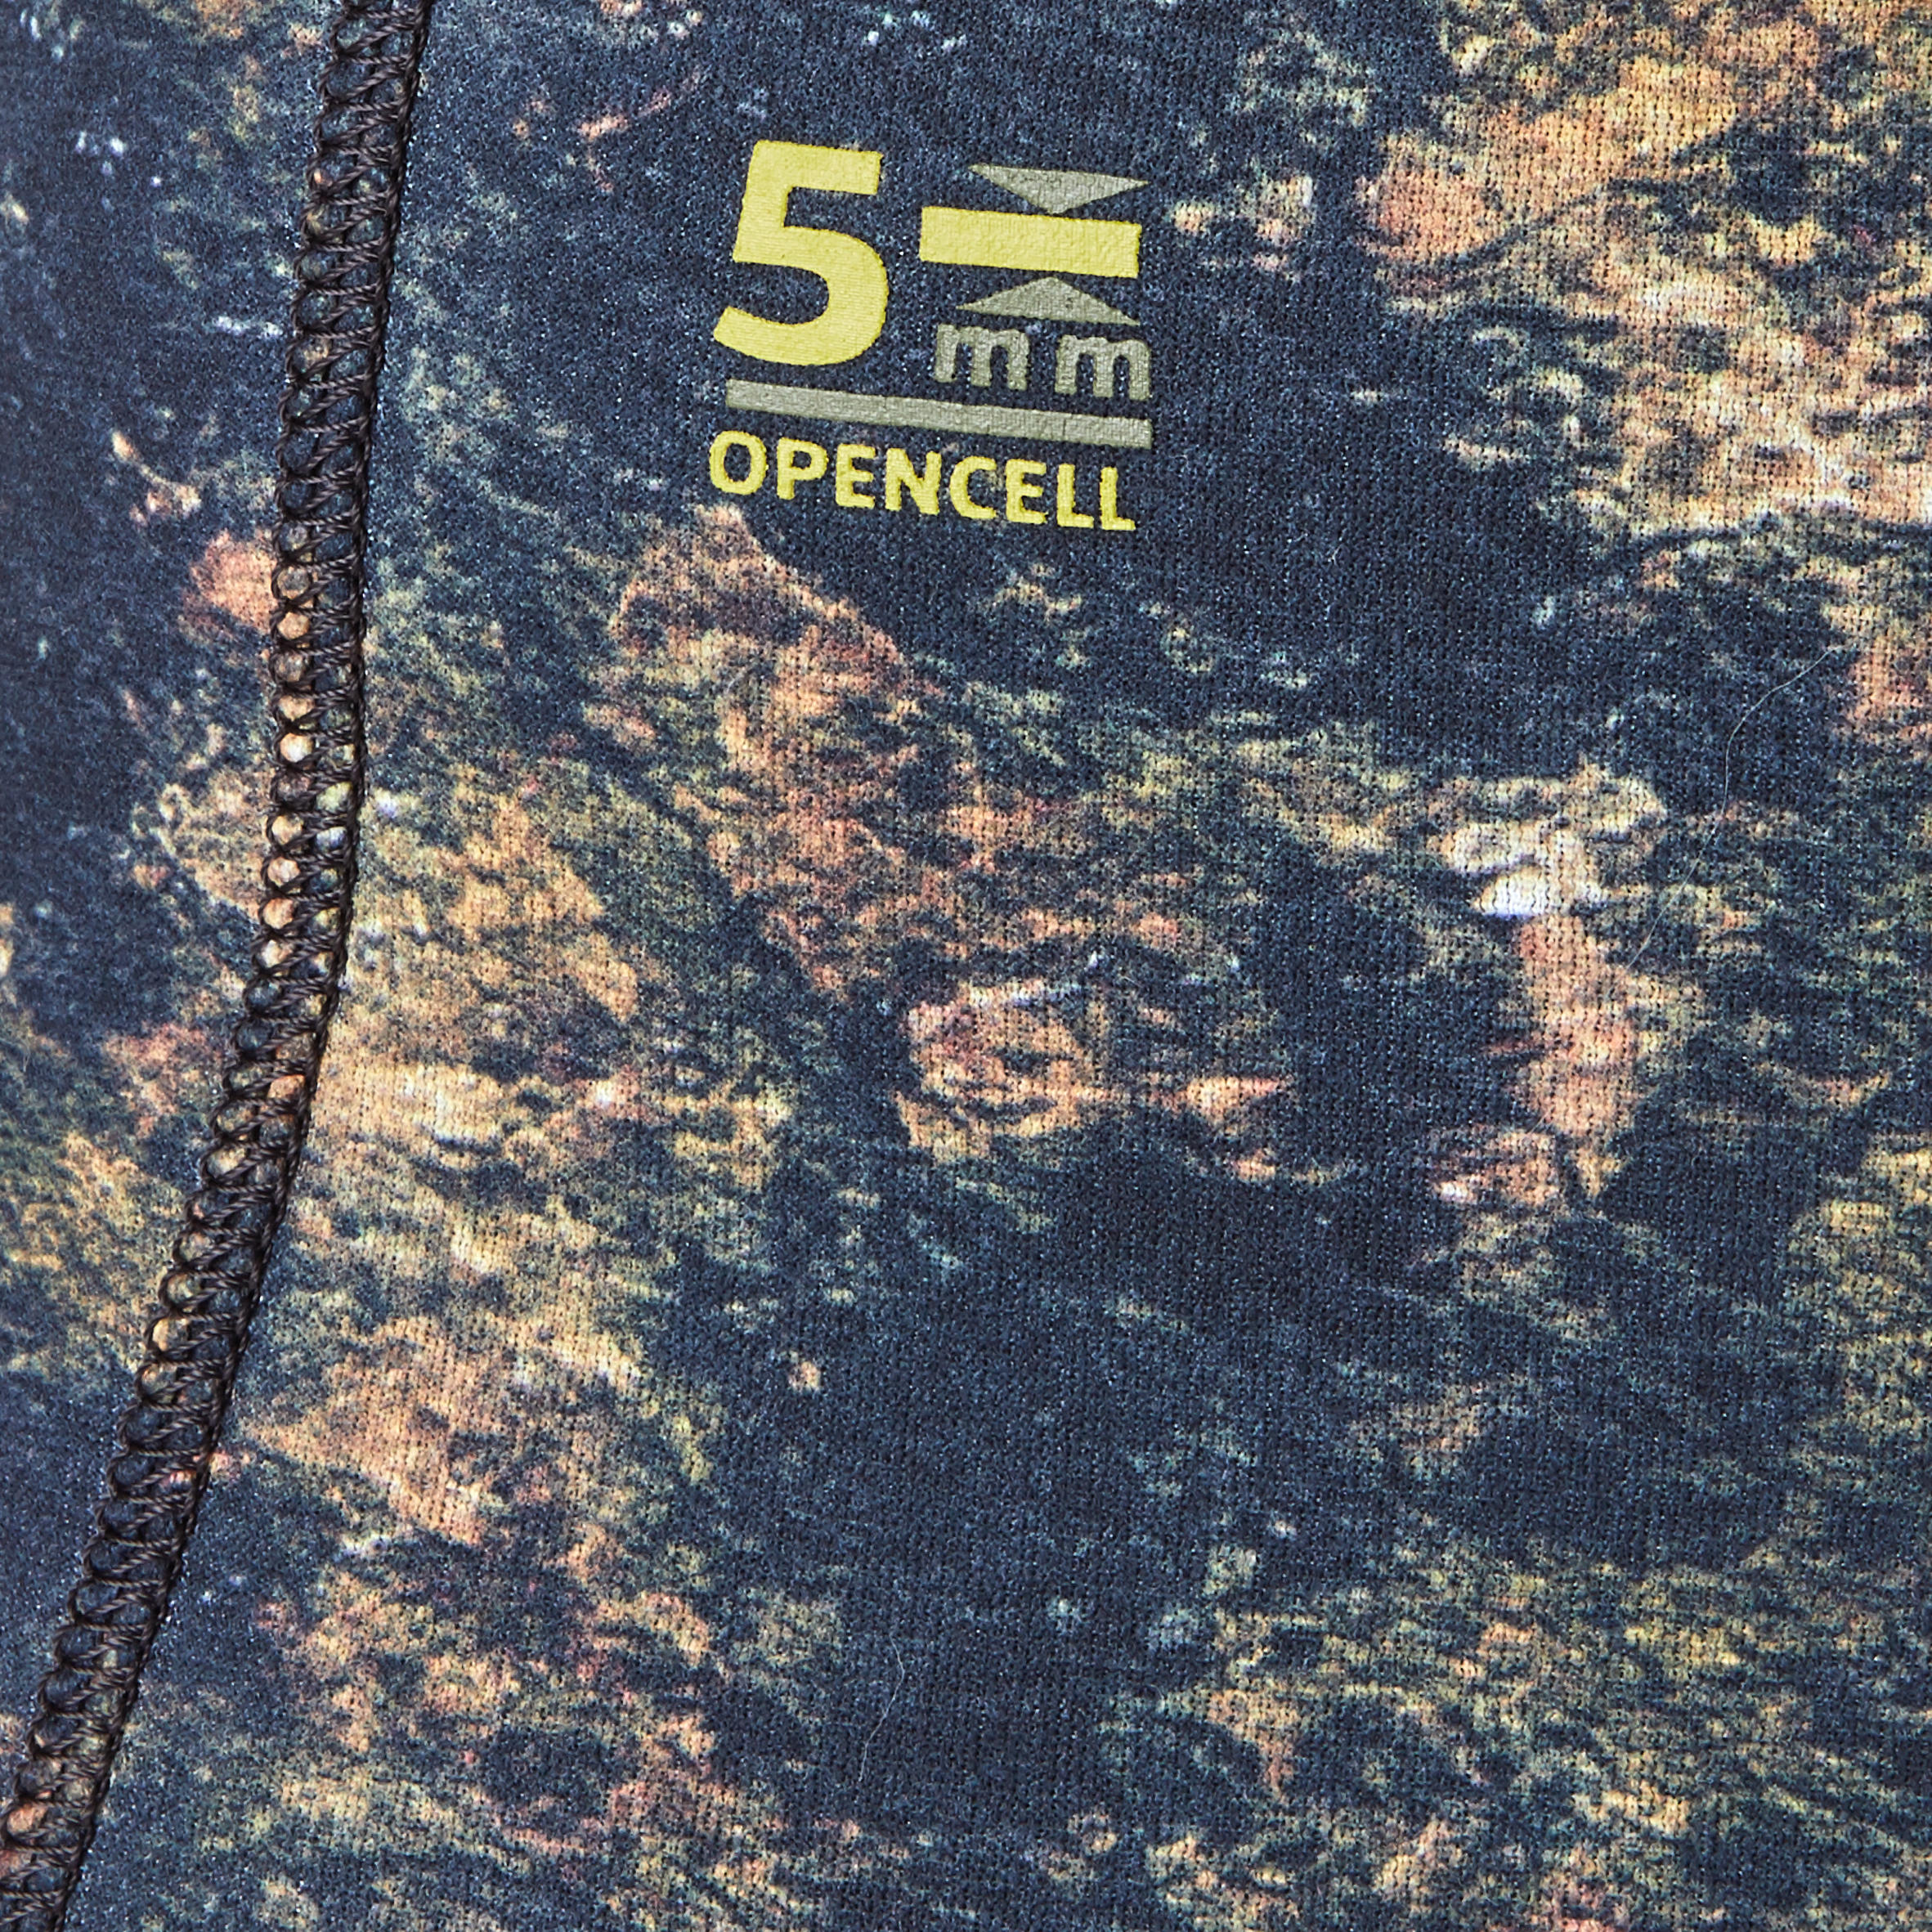 Men's spearfishing trousers 5 mm neoprene SPF 540 brown camouflage 9/9